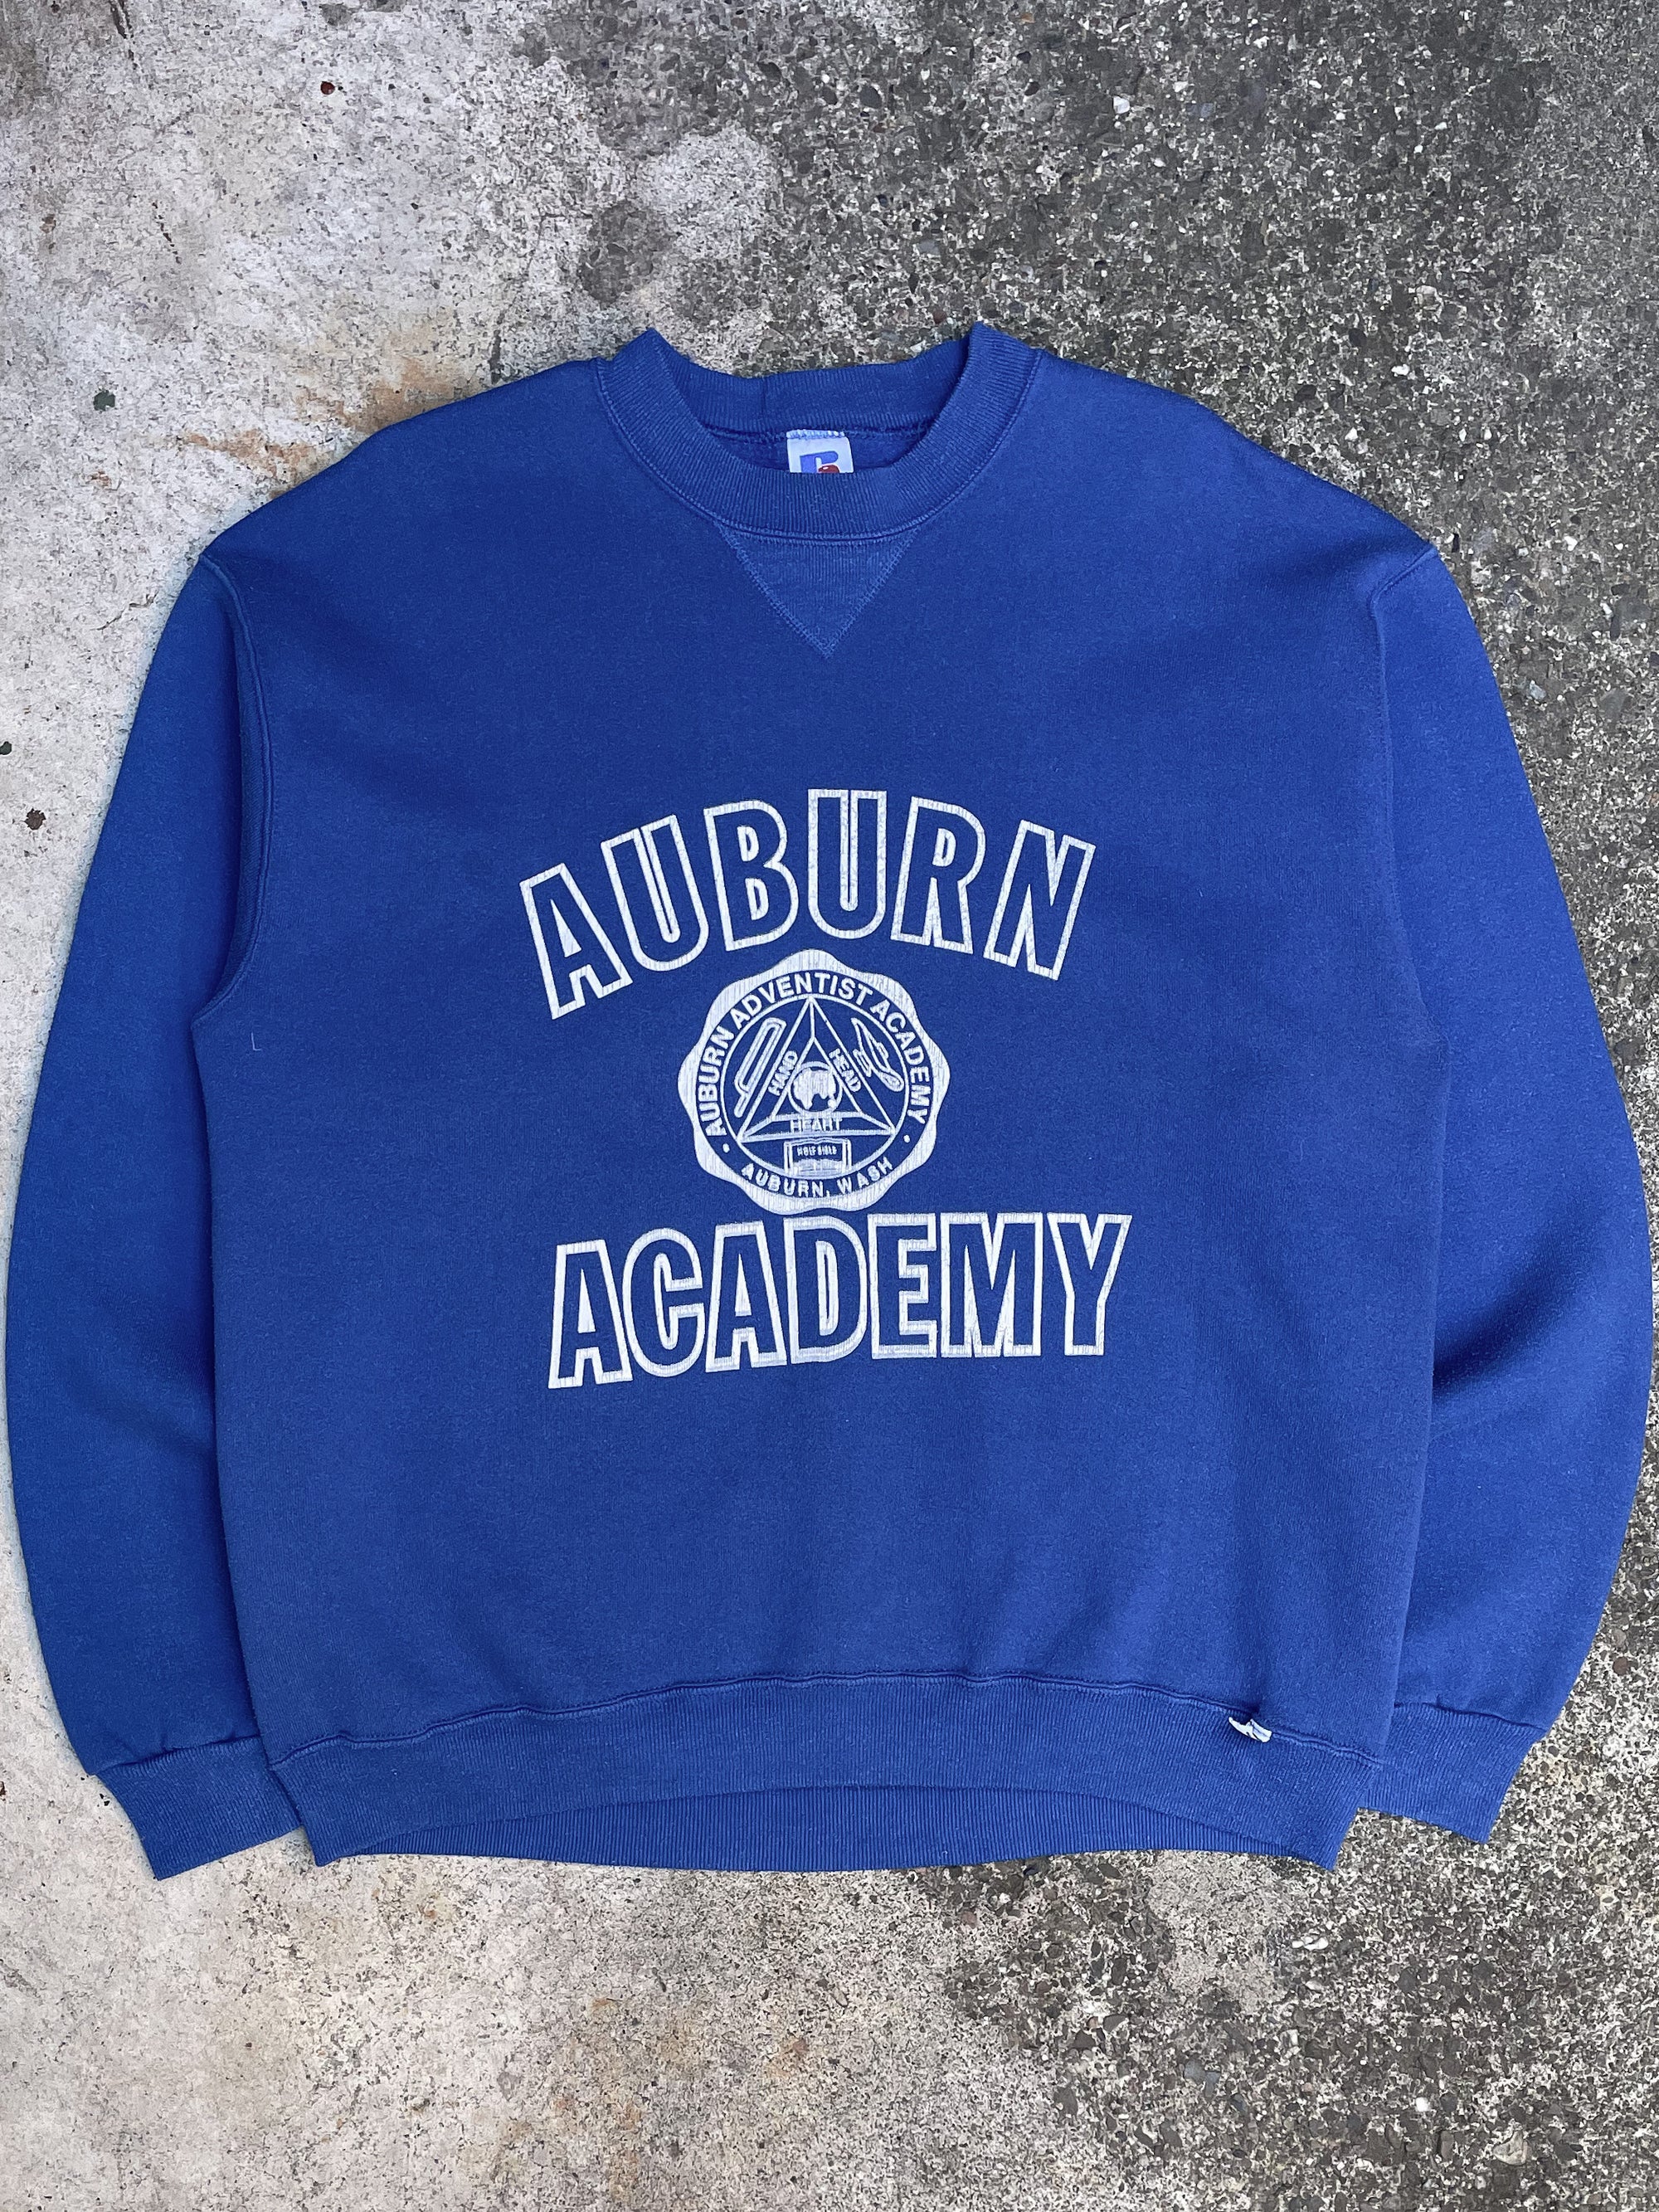 1980s Russell “Auburn Academy” Sweatshirt (L)